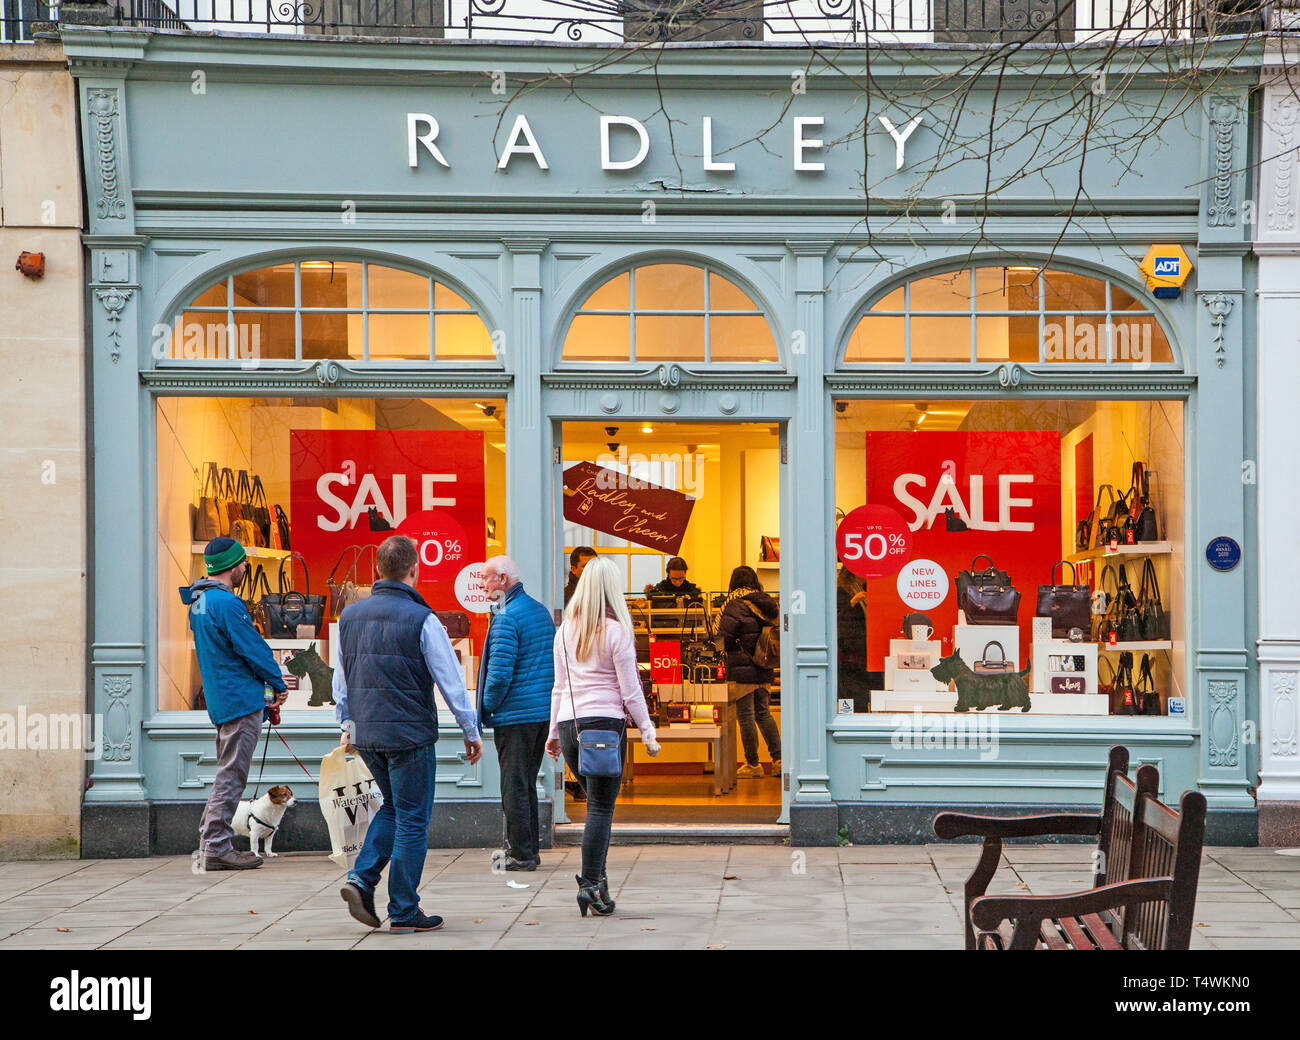 People shopping nelle vendite a high street fashion retailer borsette Radley shop / store in Cheltenham Gloucester England Regno Unito Foto Stock